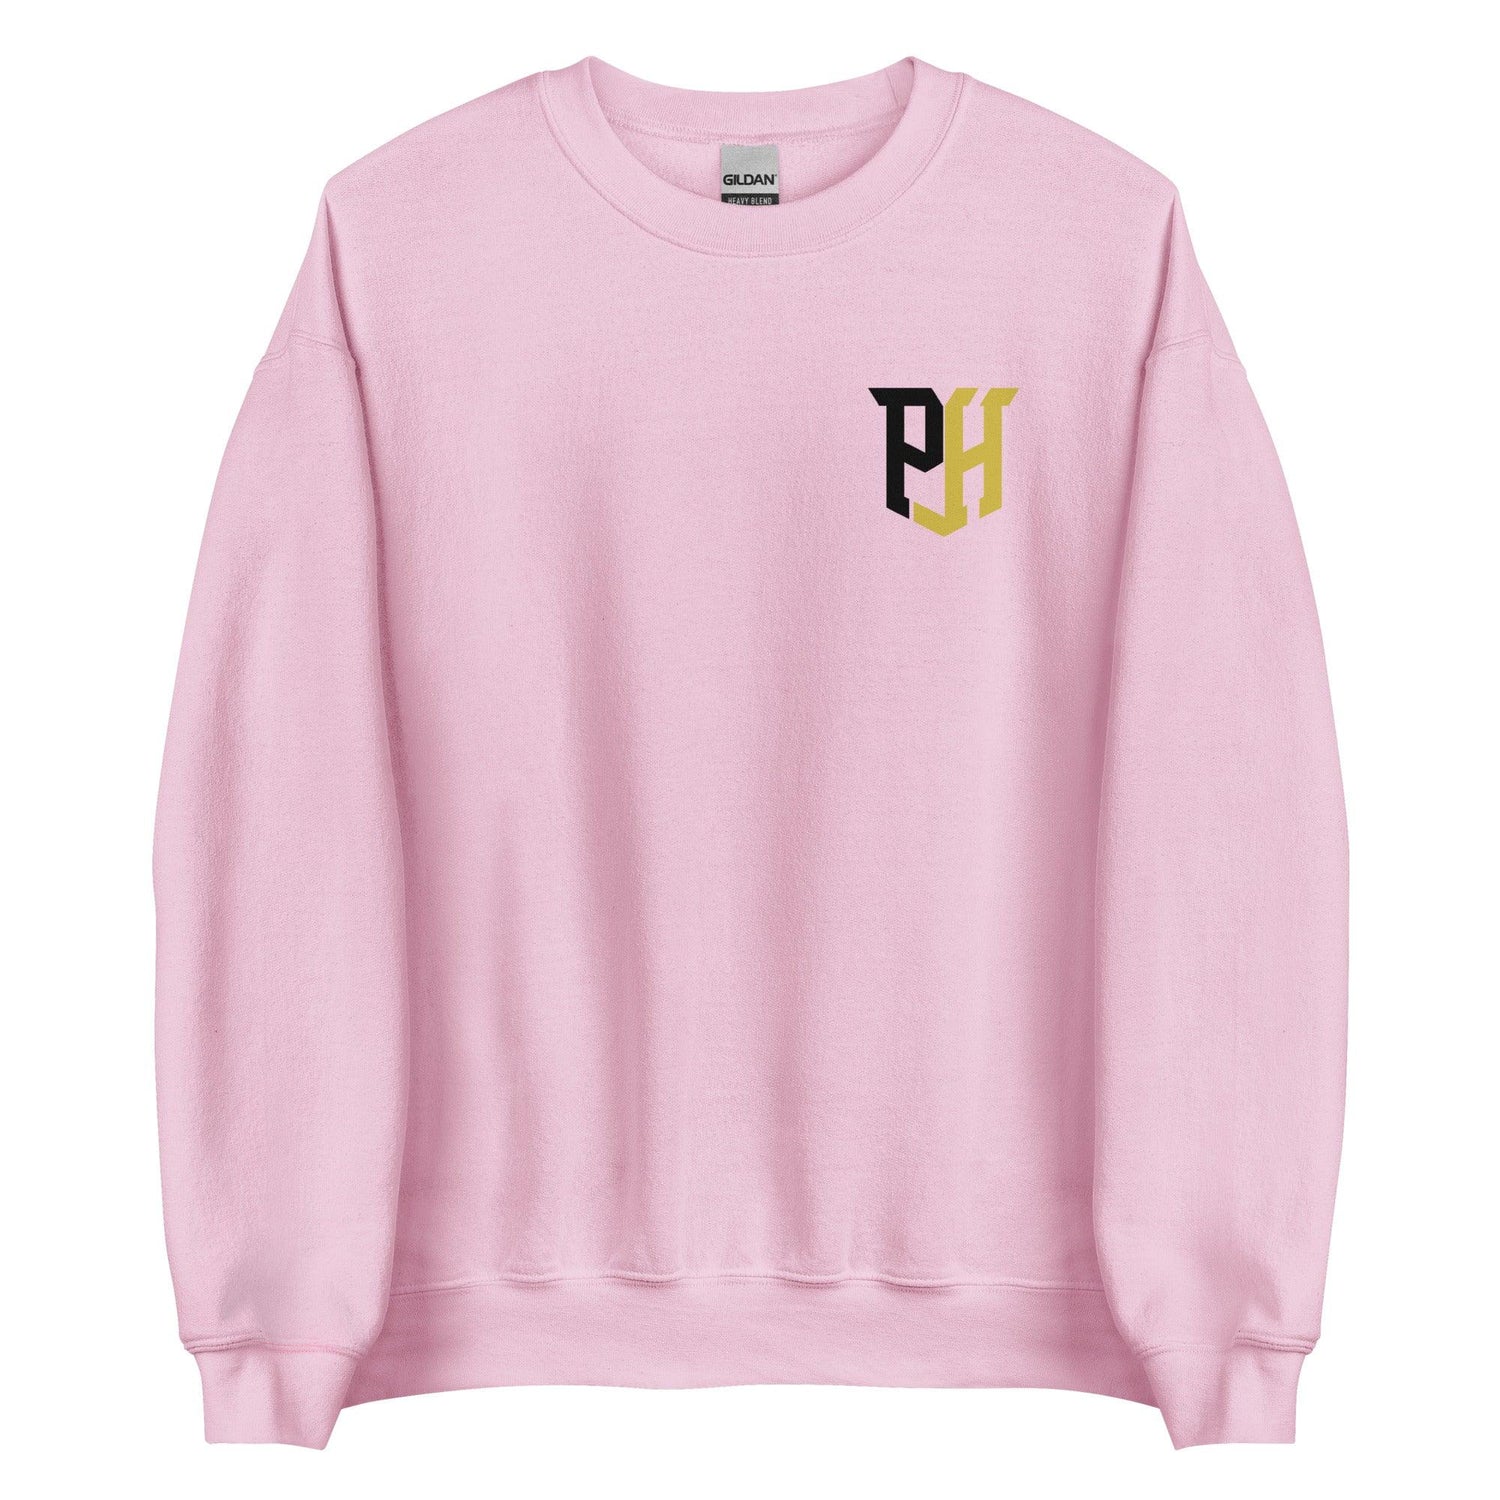 Prentiss Hubb “PH” Sweatshirt - Fan Arch